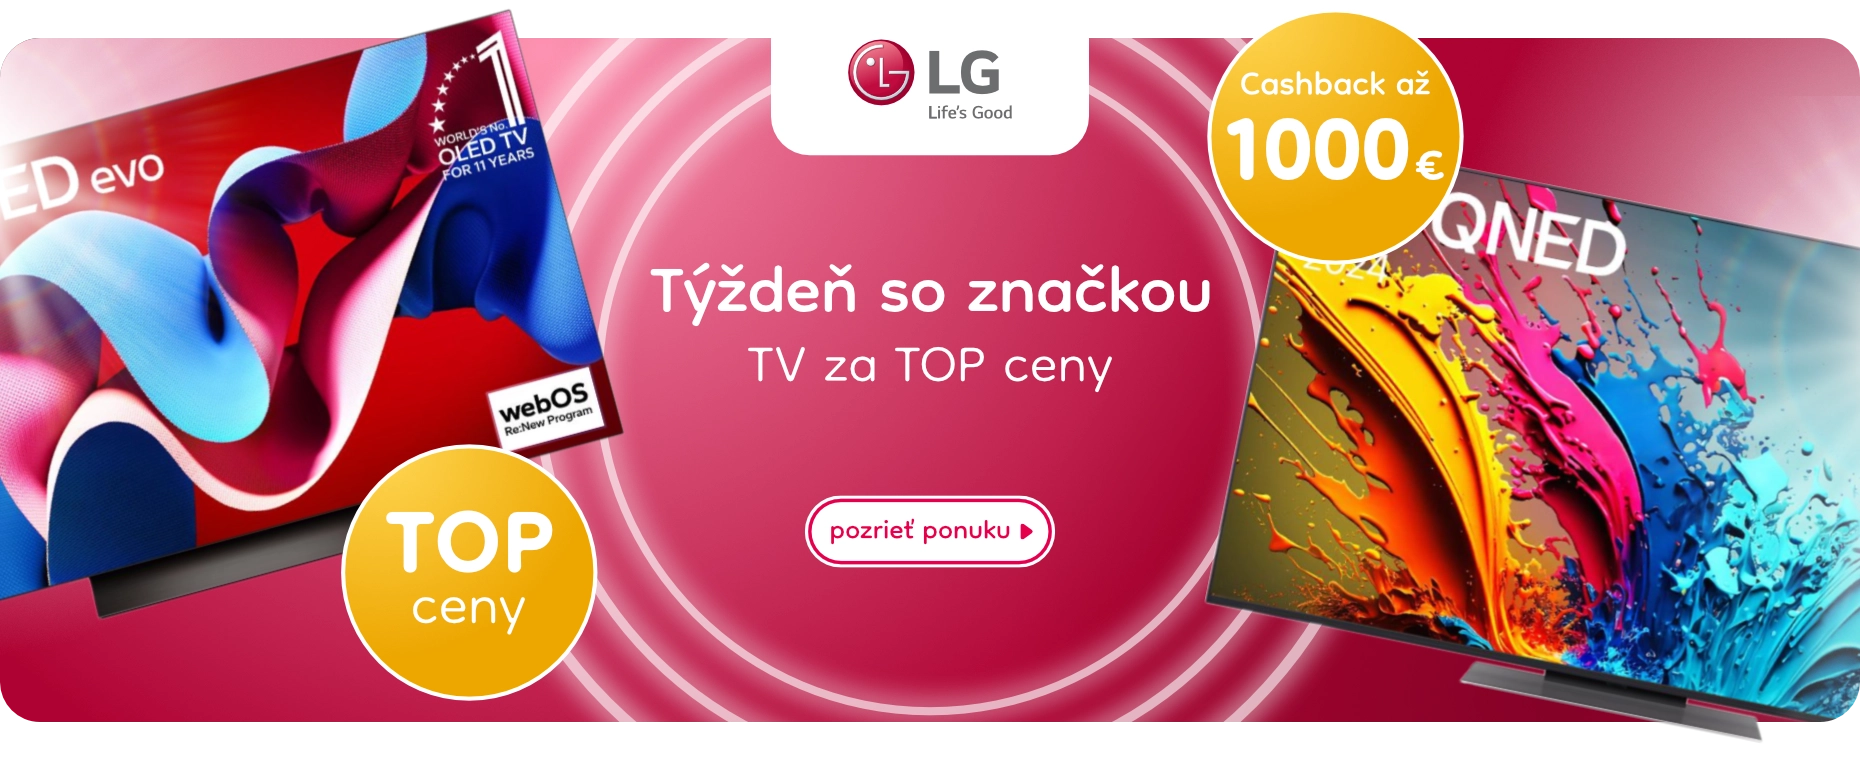 LG TV 10%